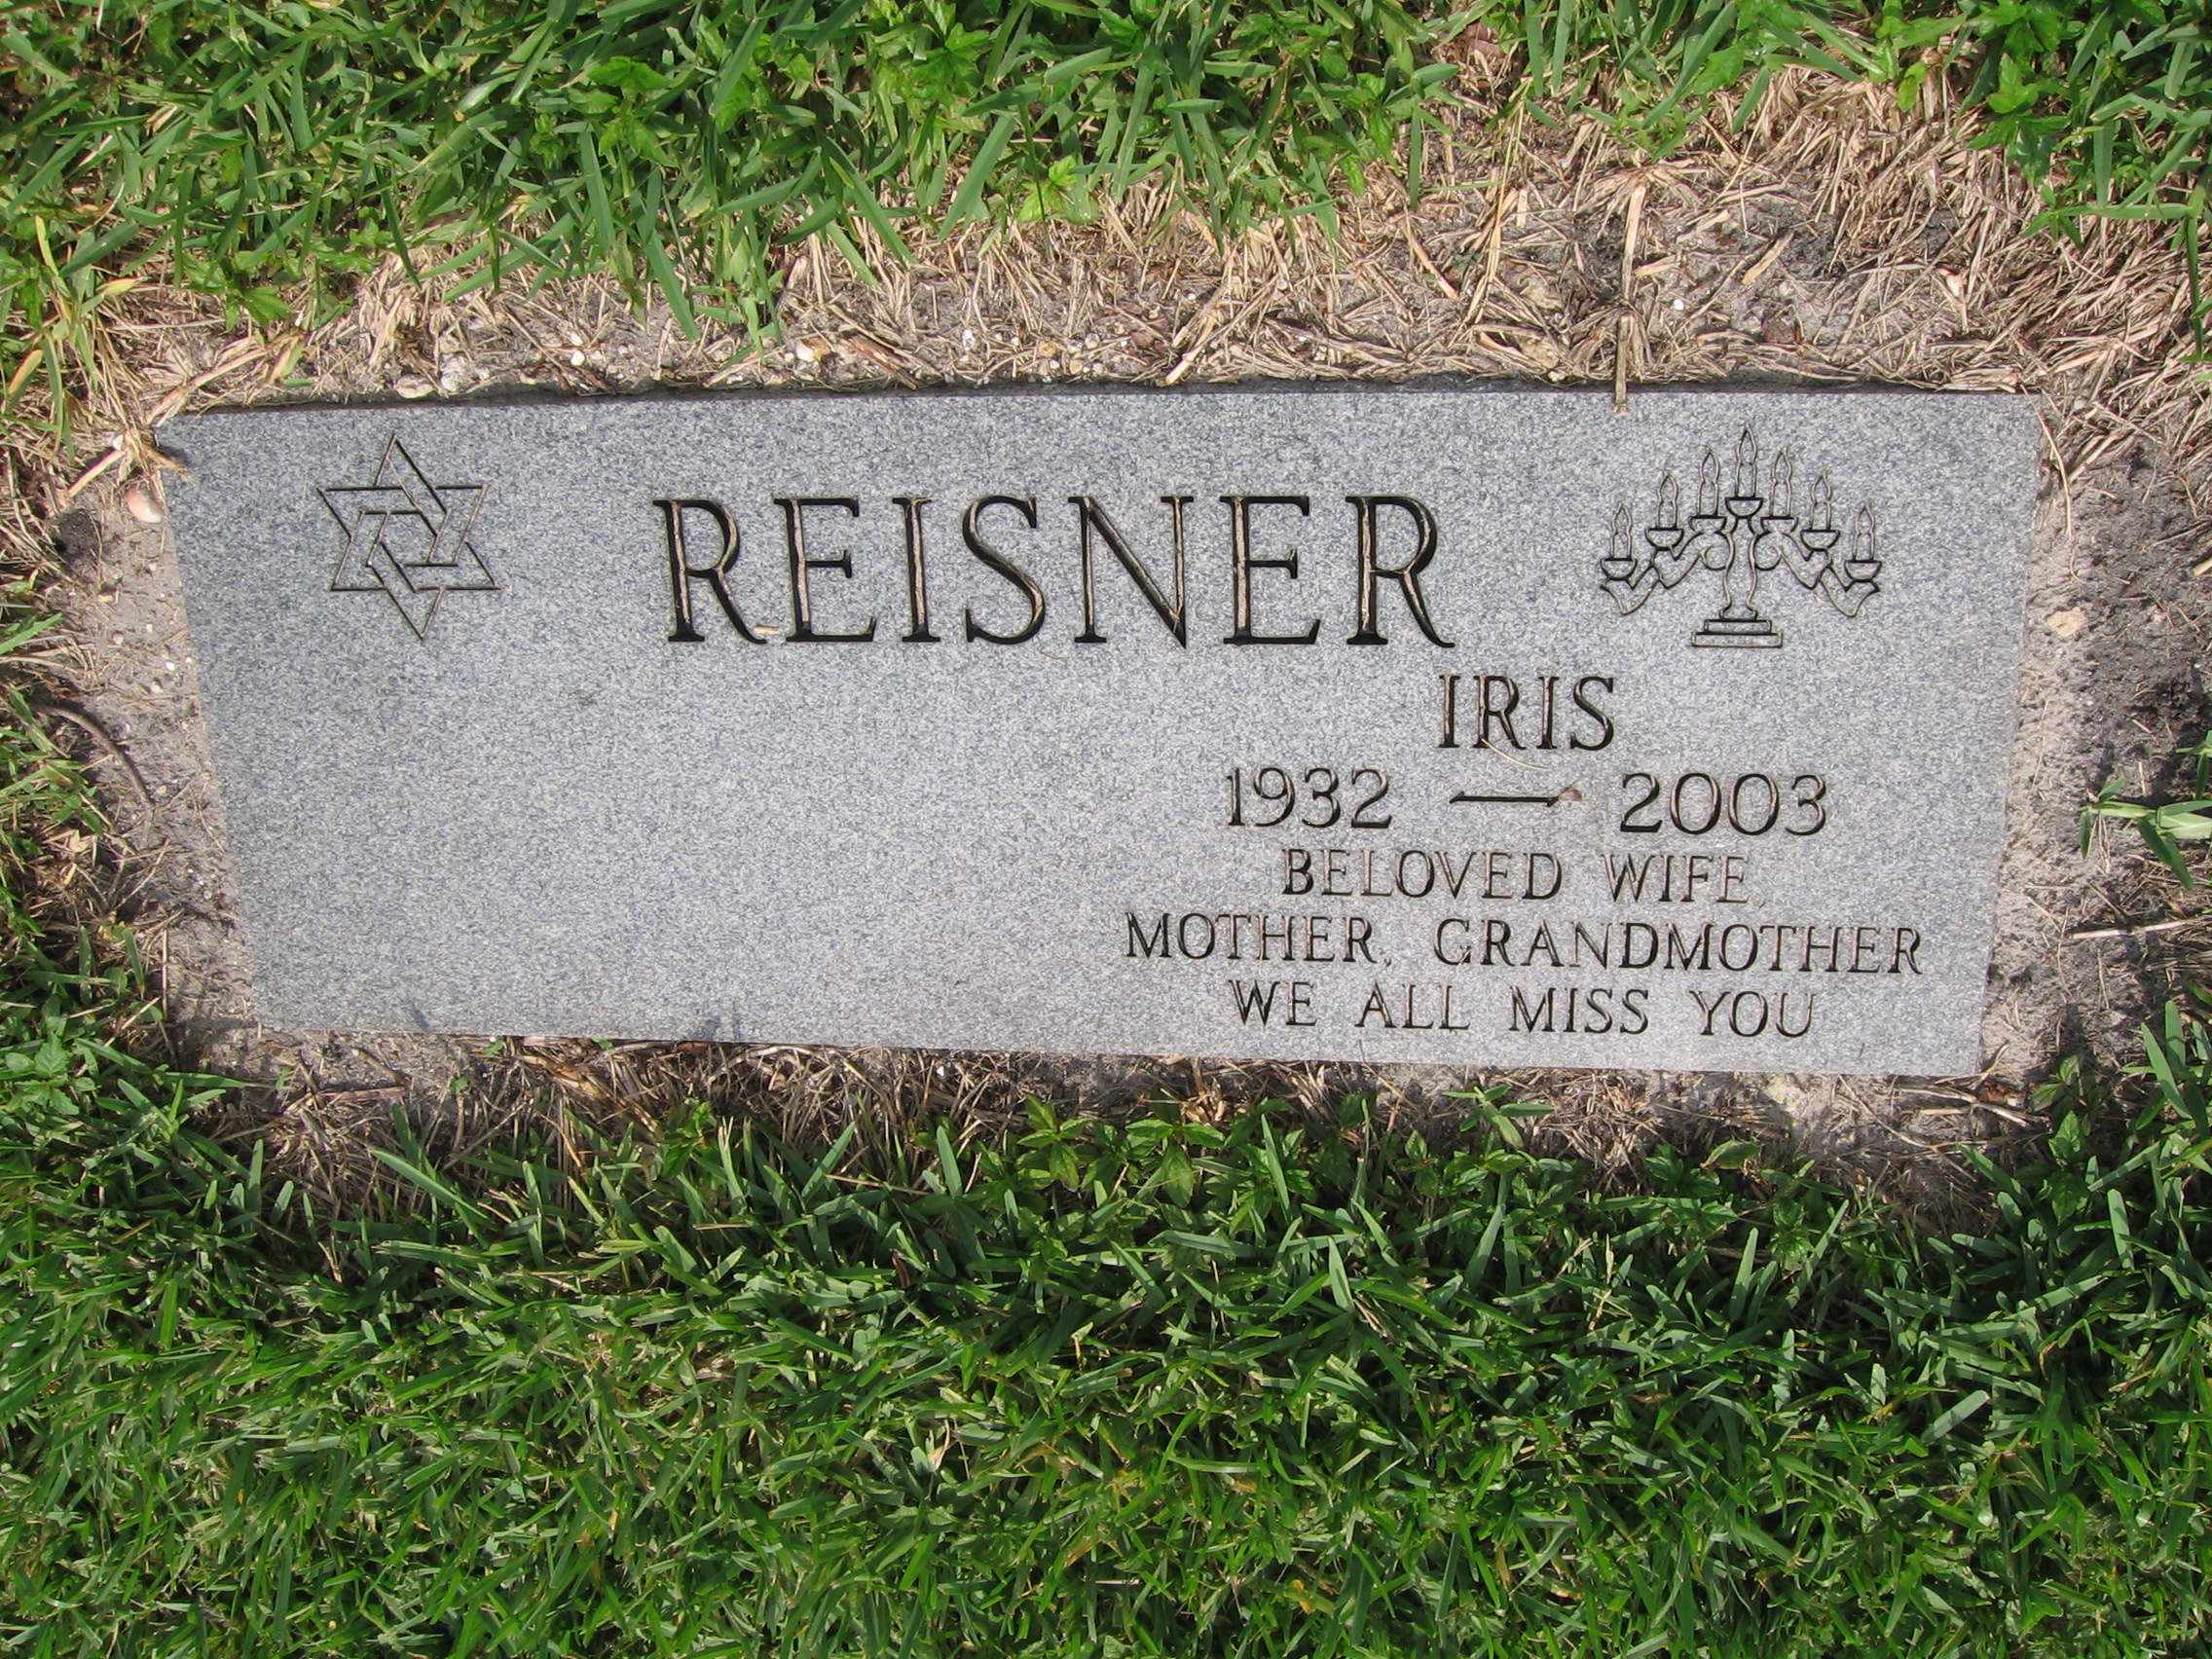 Iris Reisner